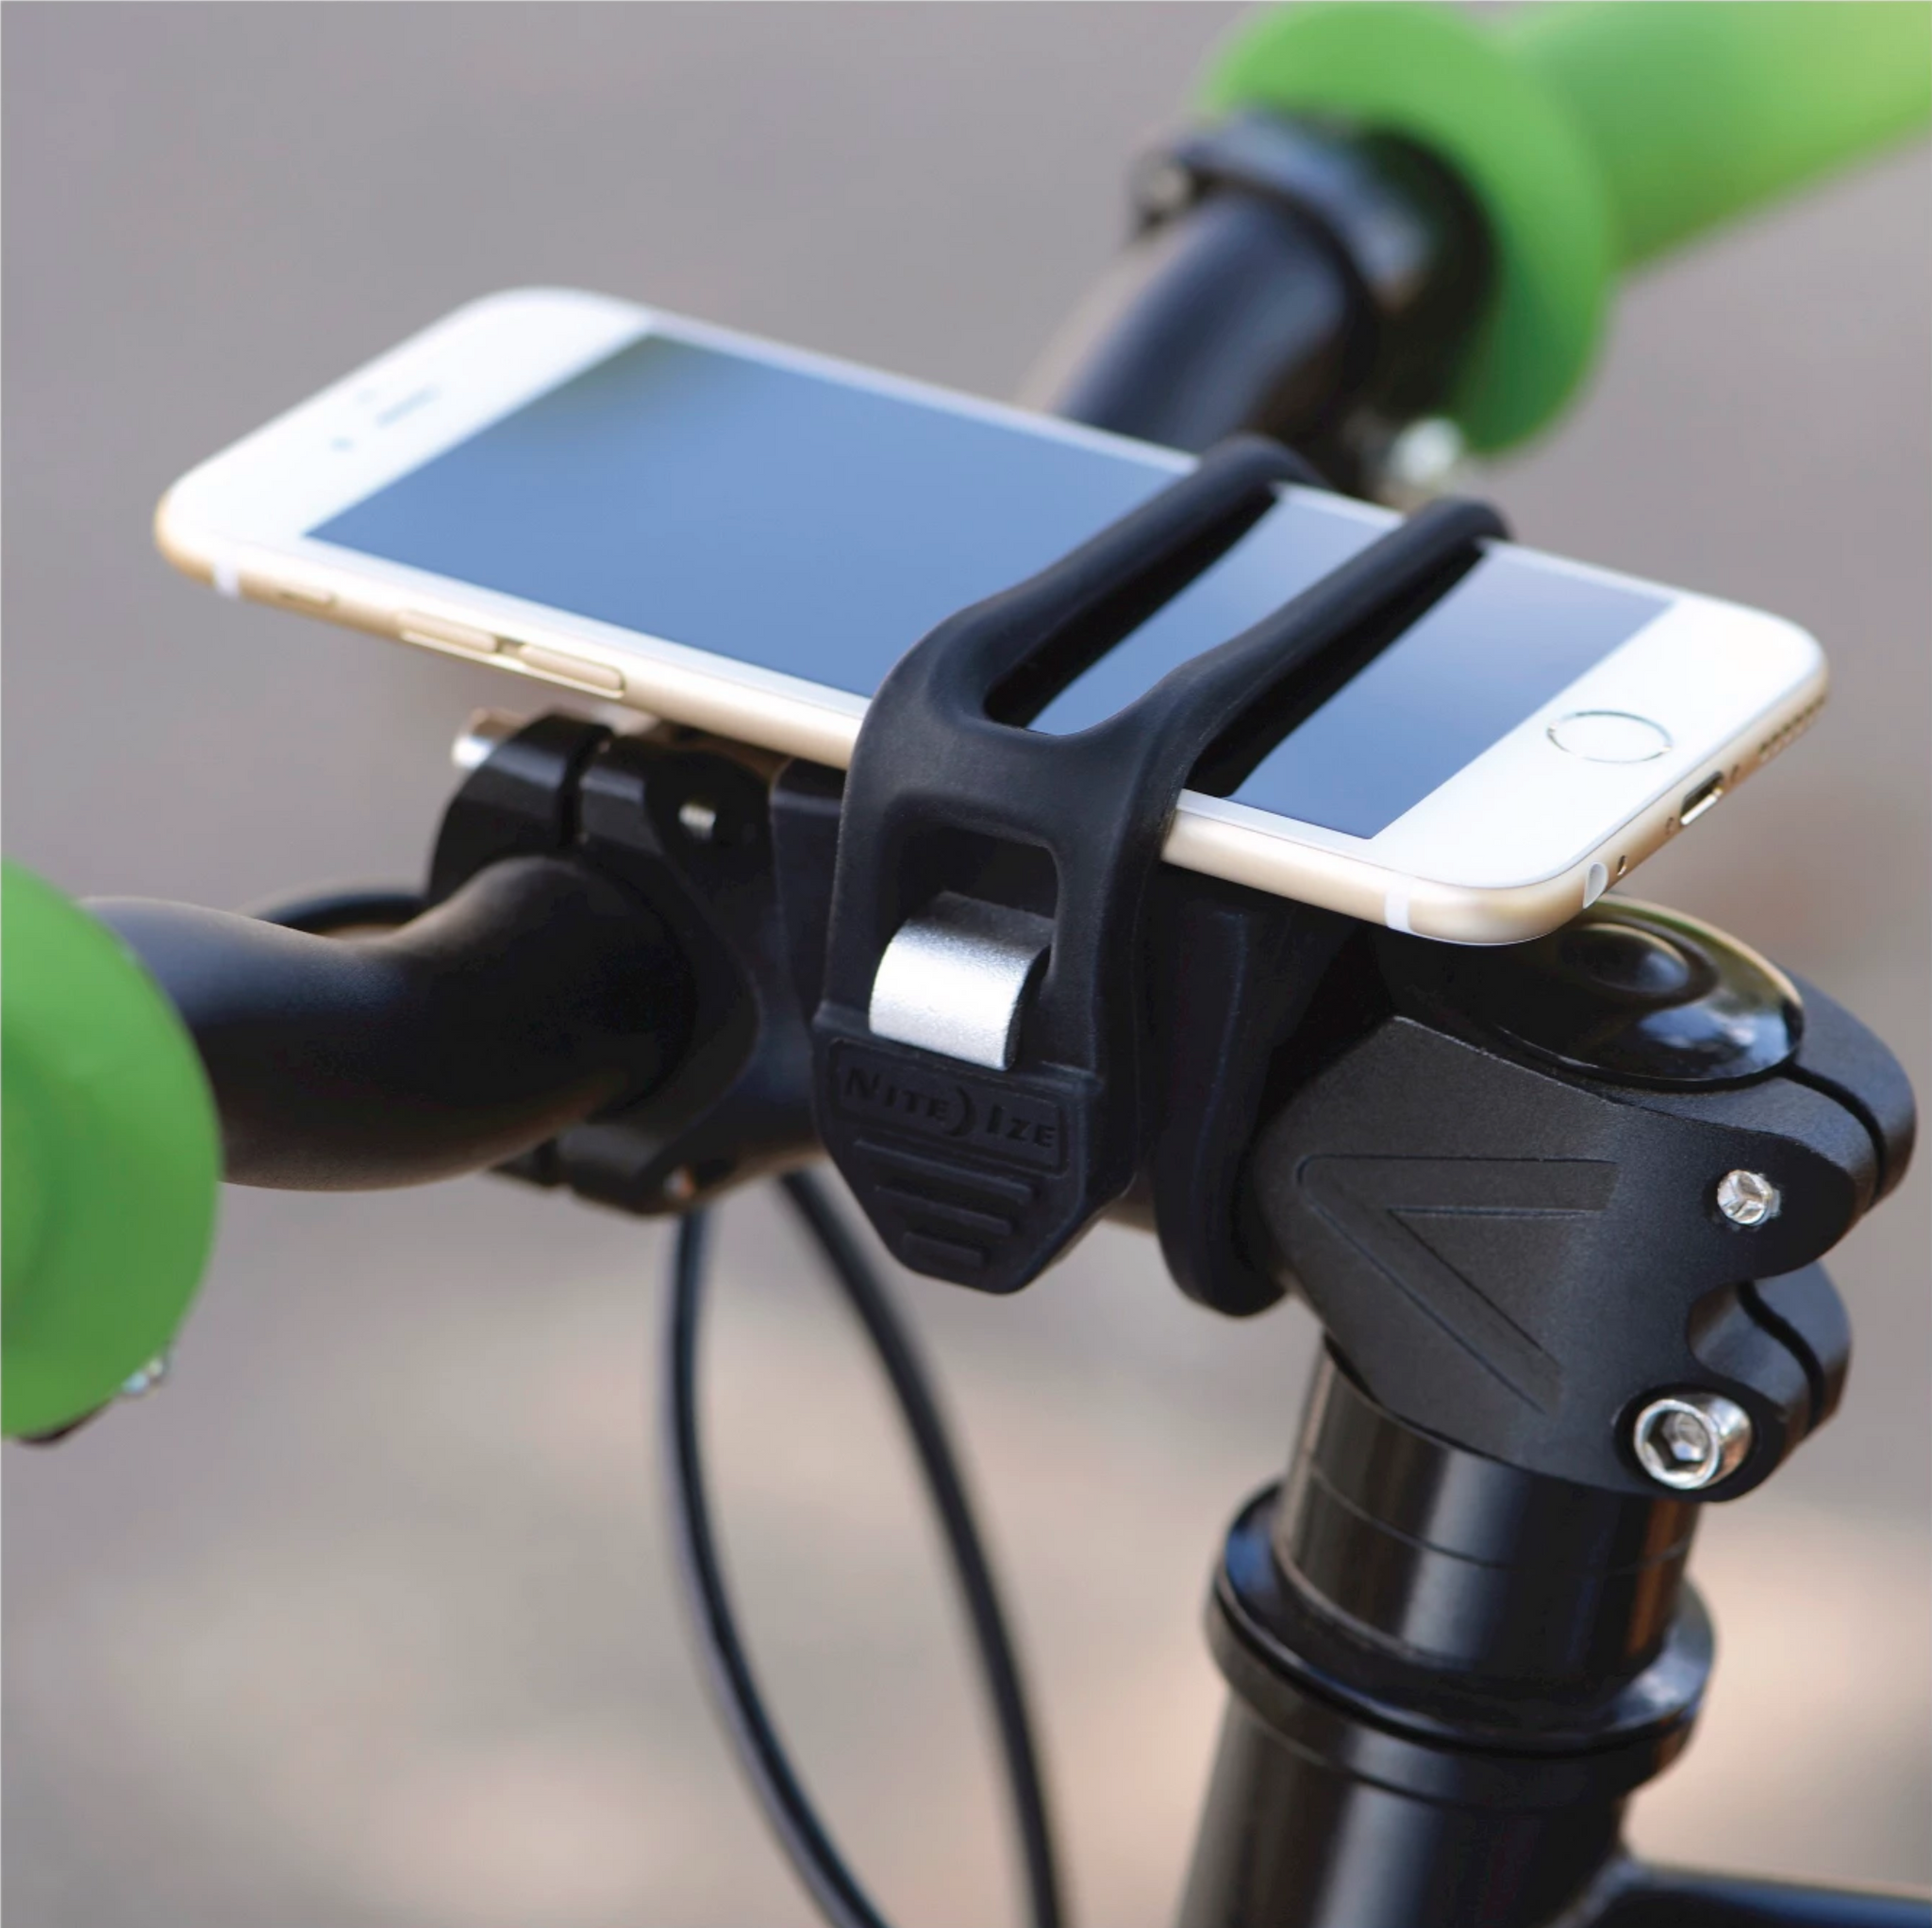 smartphone bike mount